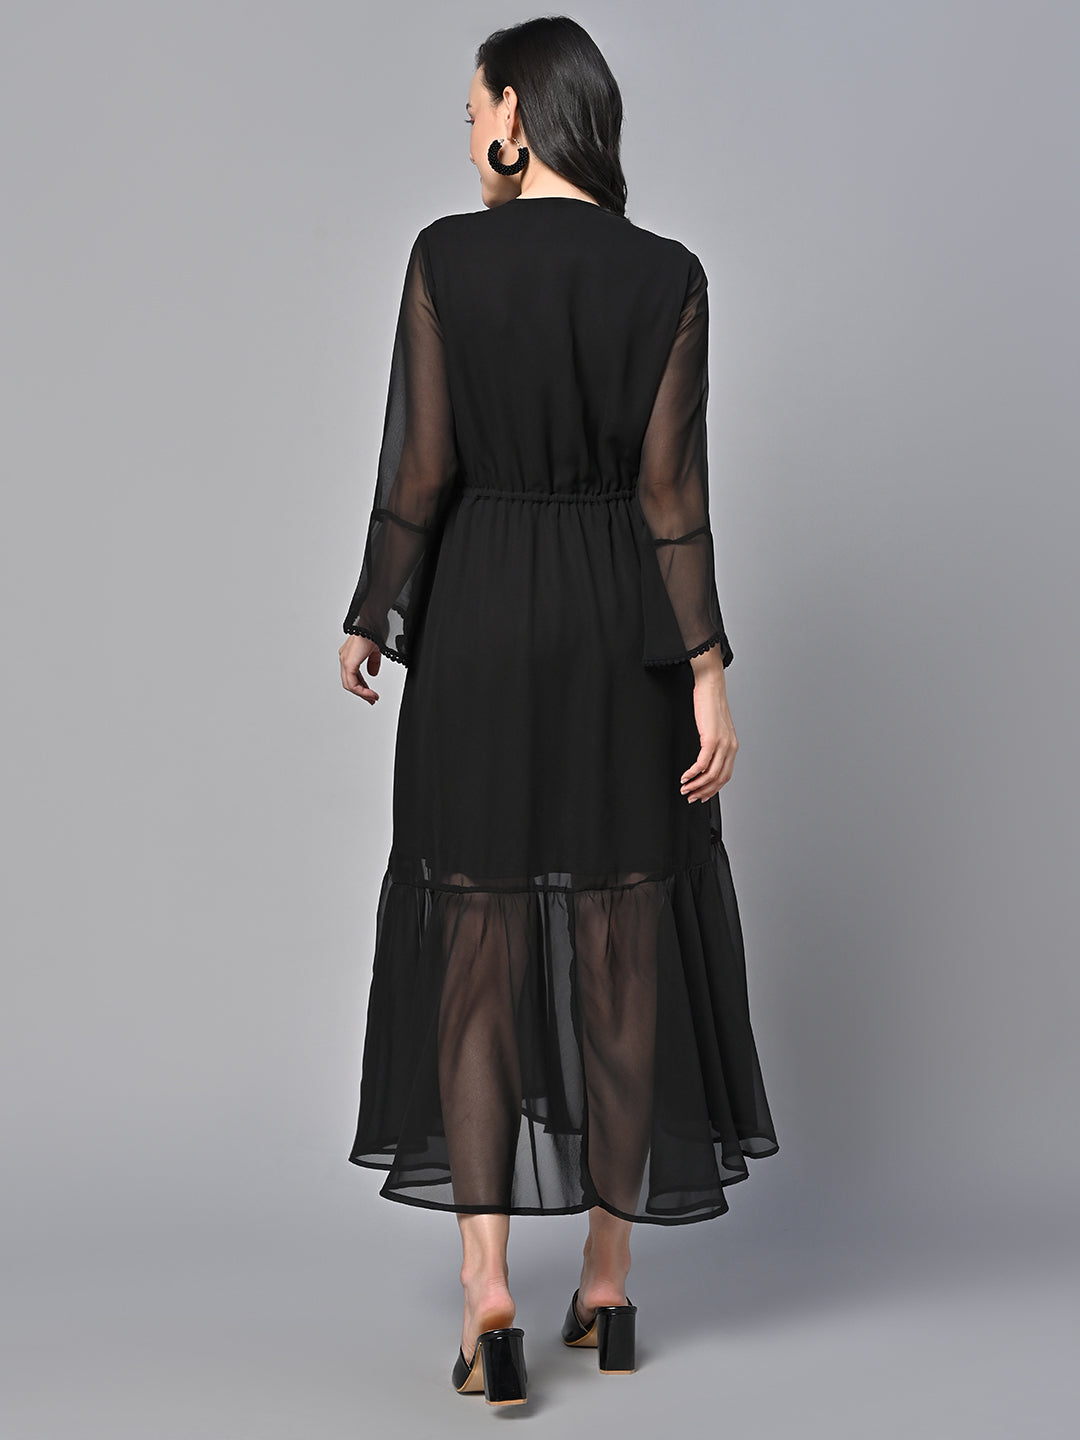 Shop Black Maxi dress for women online at bebaakstudio.com – Bebaak